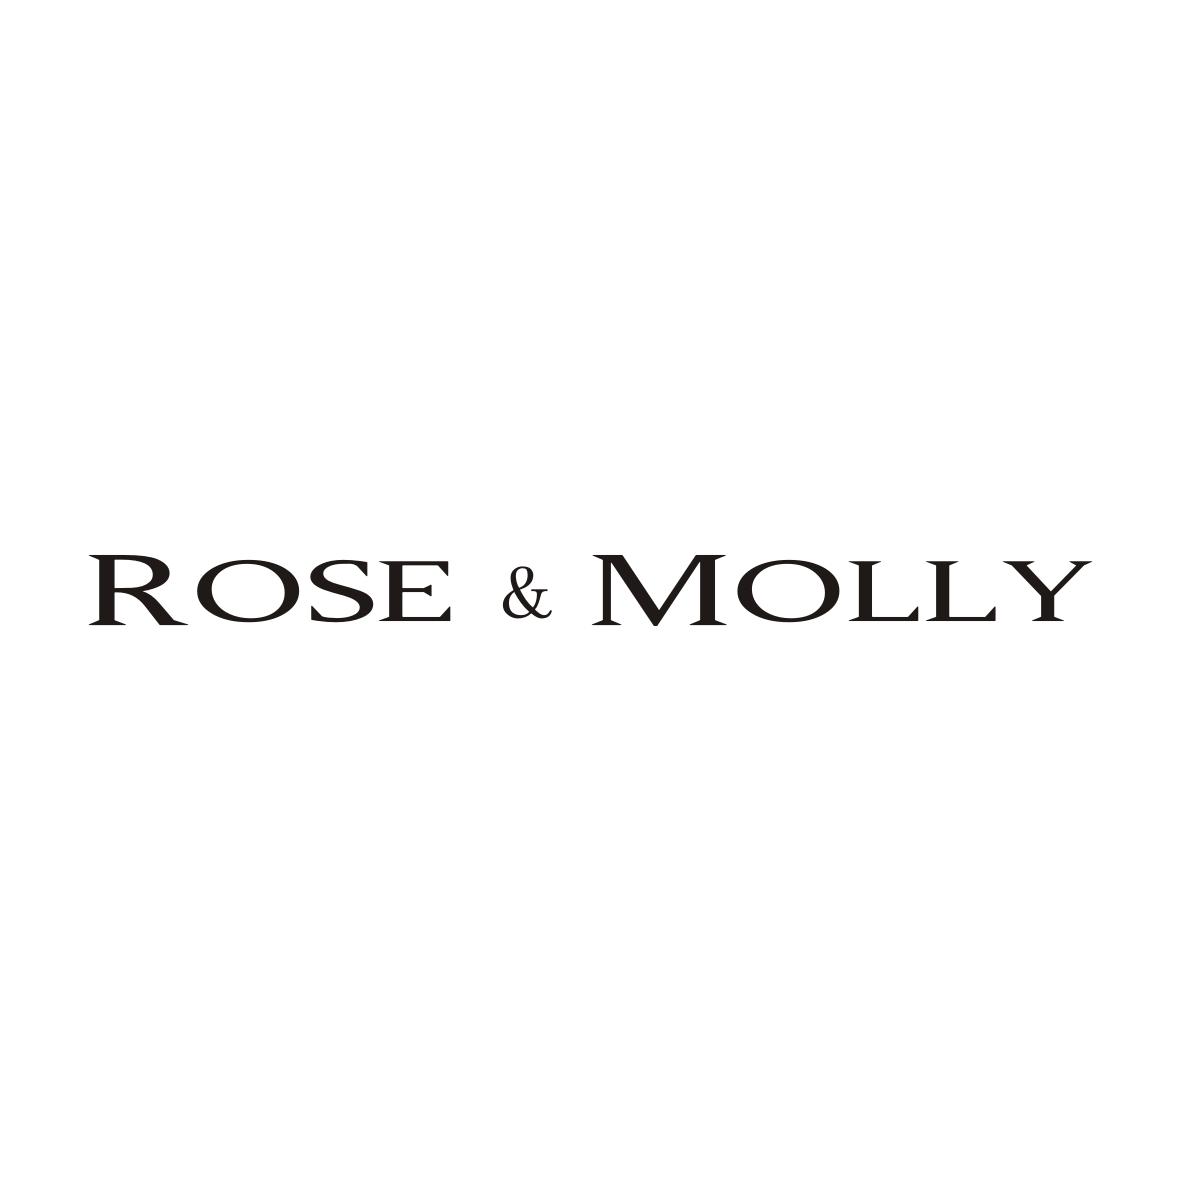 30类-面点饮品ROSE & MOLLY商标转让